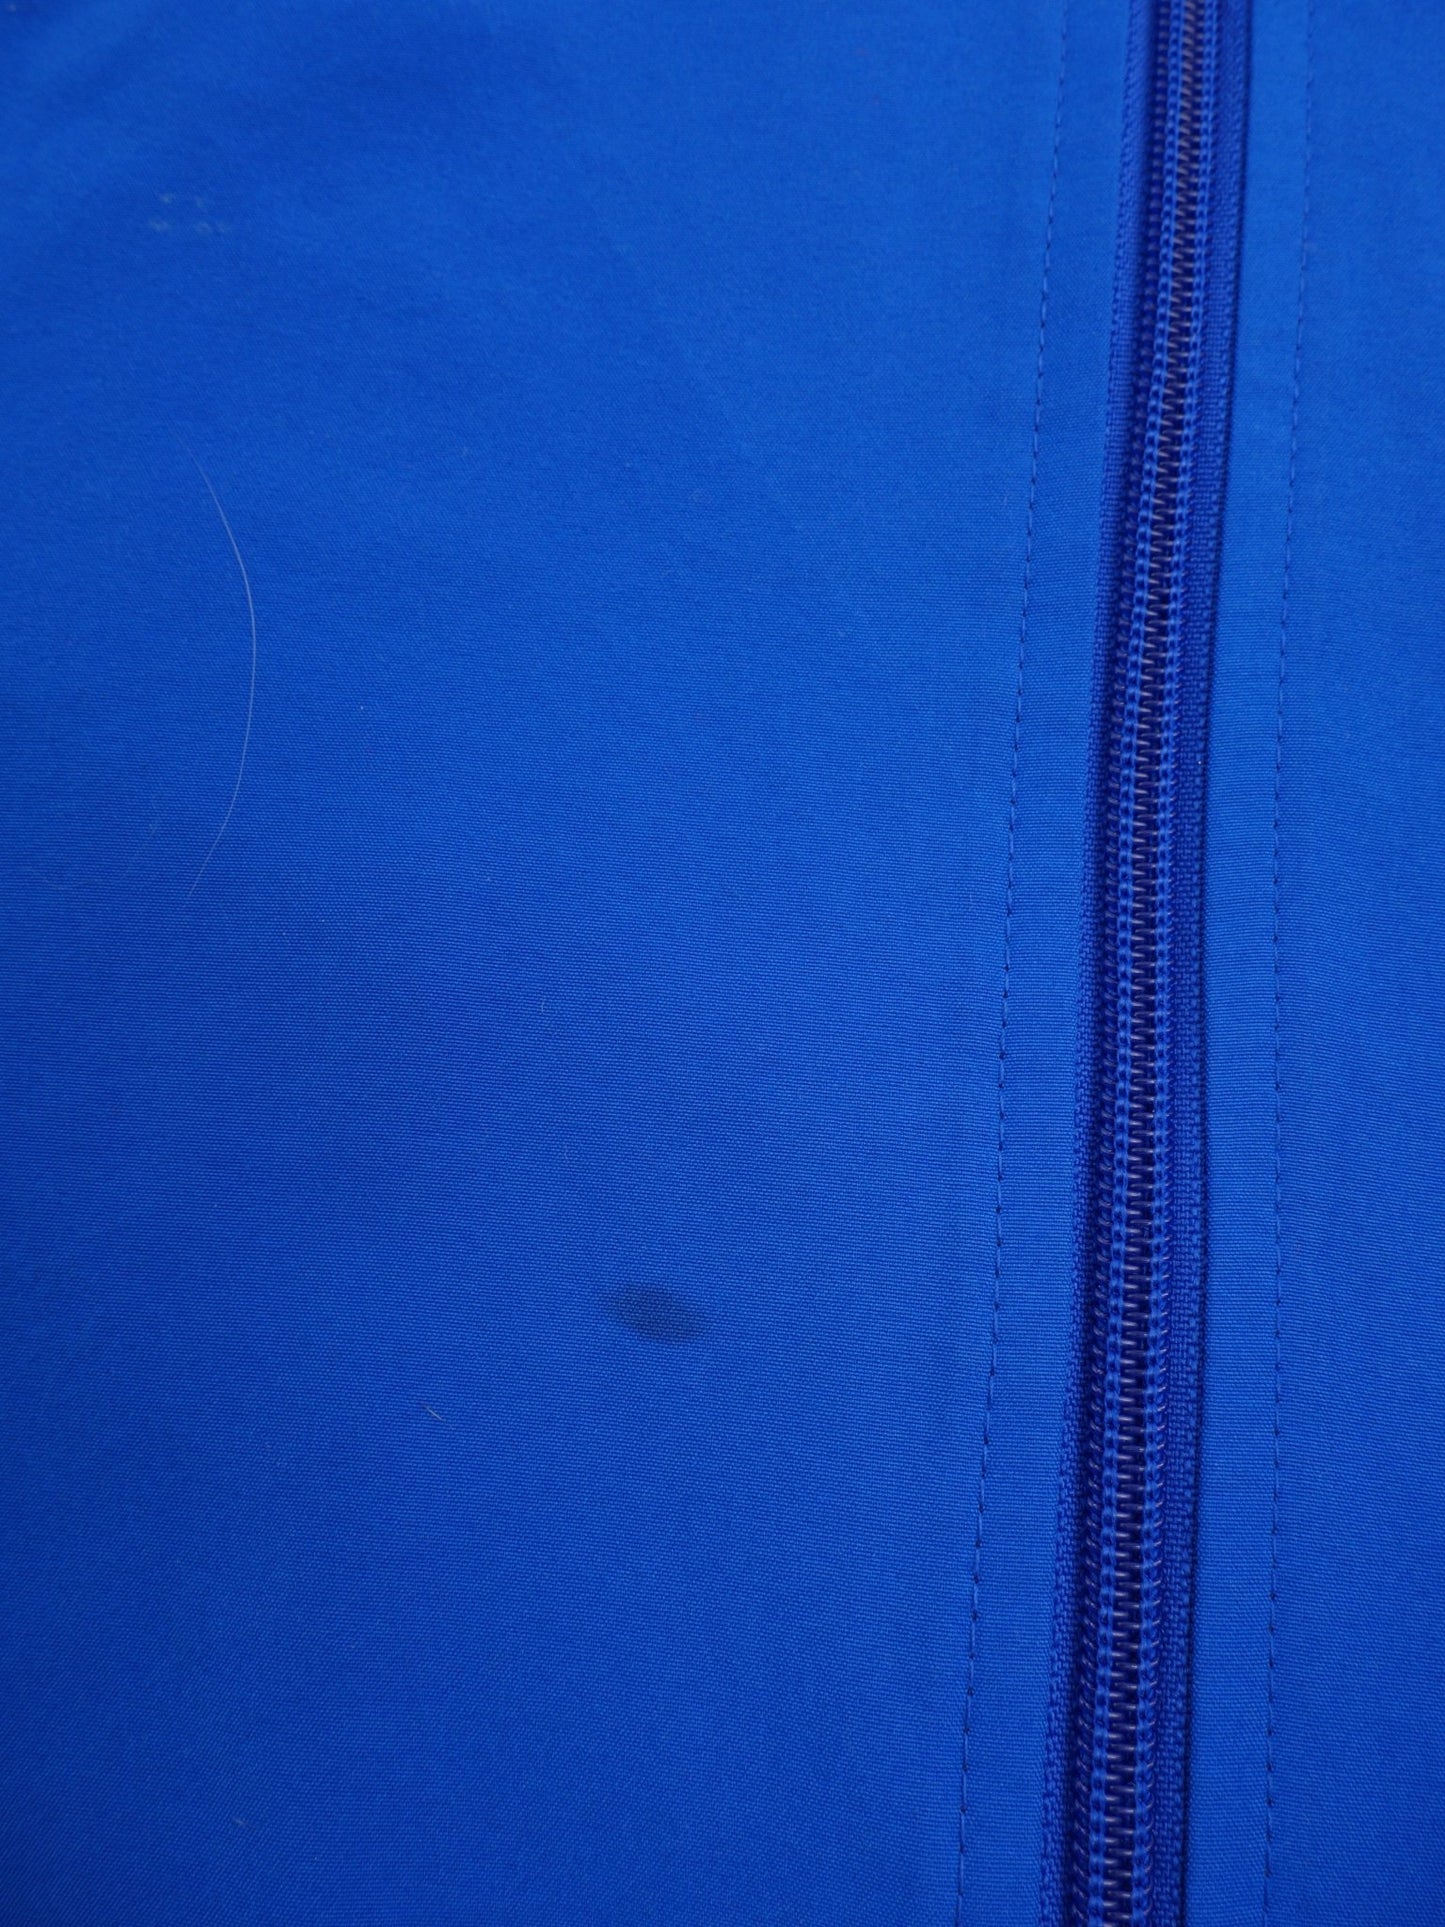 puma embroidered Logo blue Track Jacket - Peeces